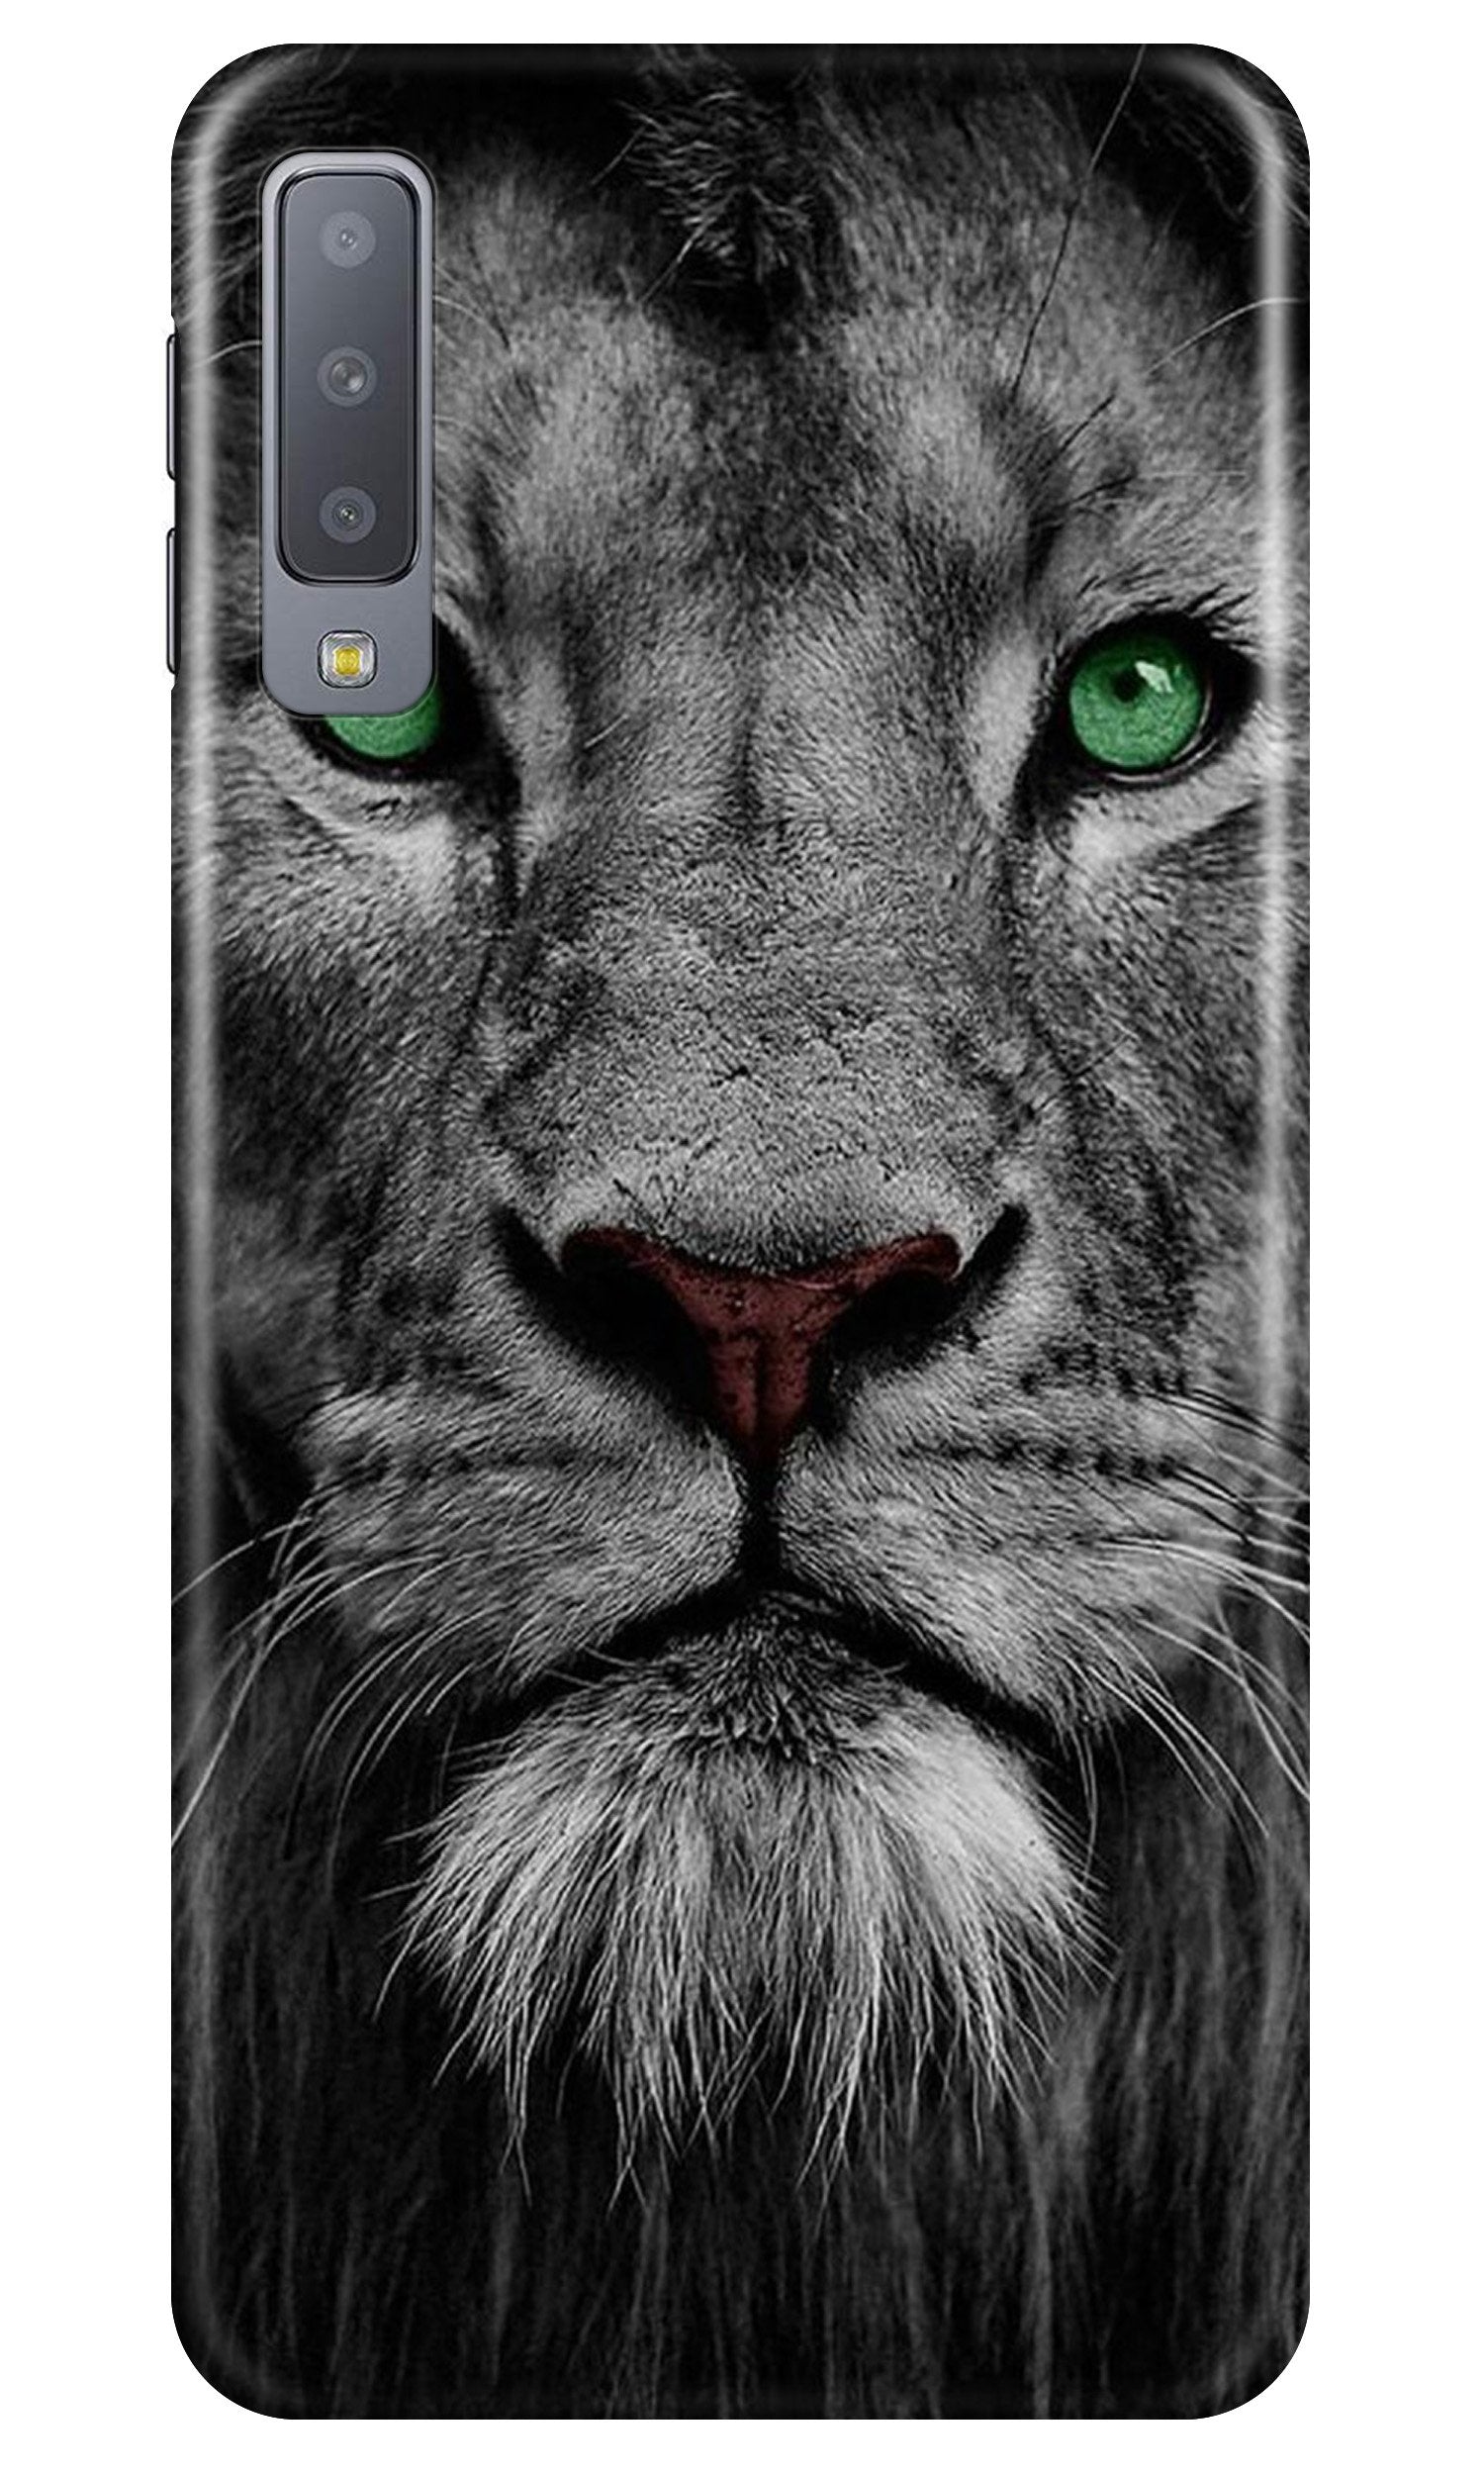 Lion Case for Samung Galaxy A70s (Design No. 272)